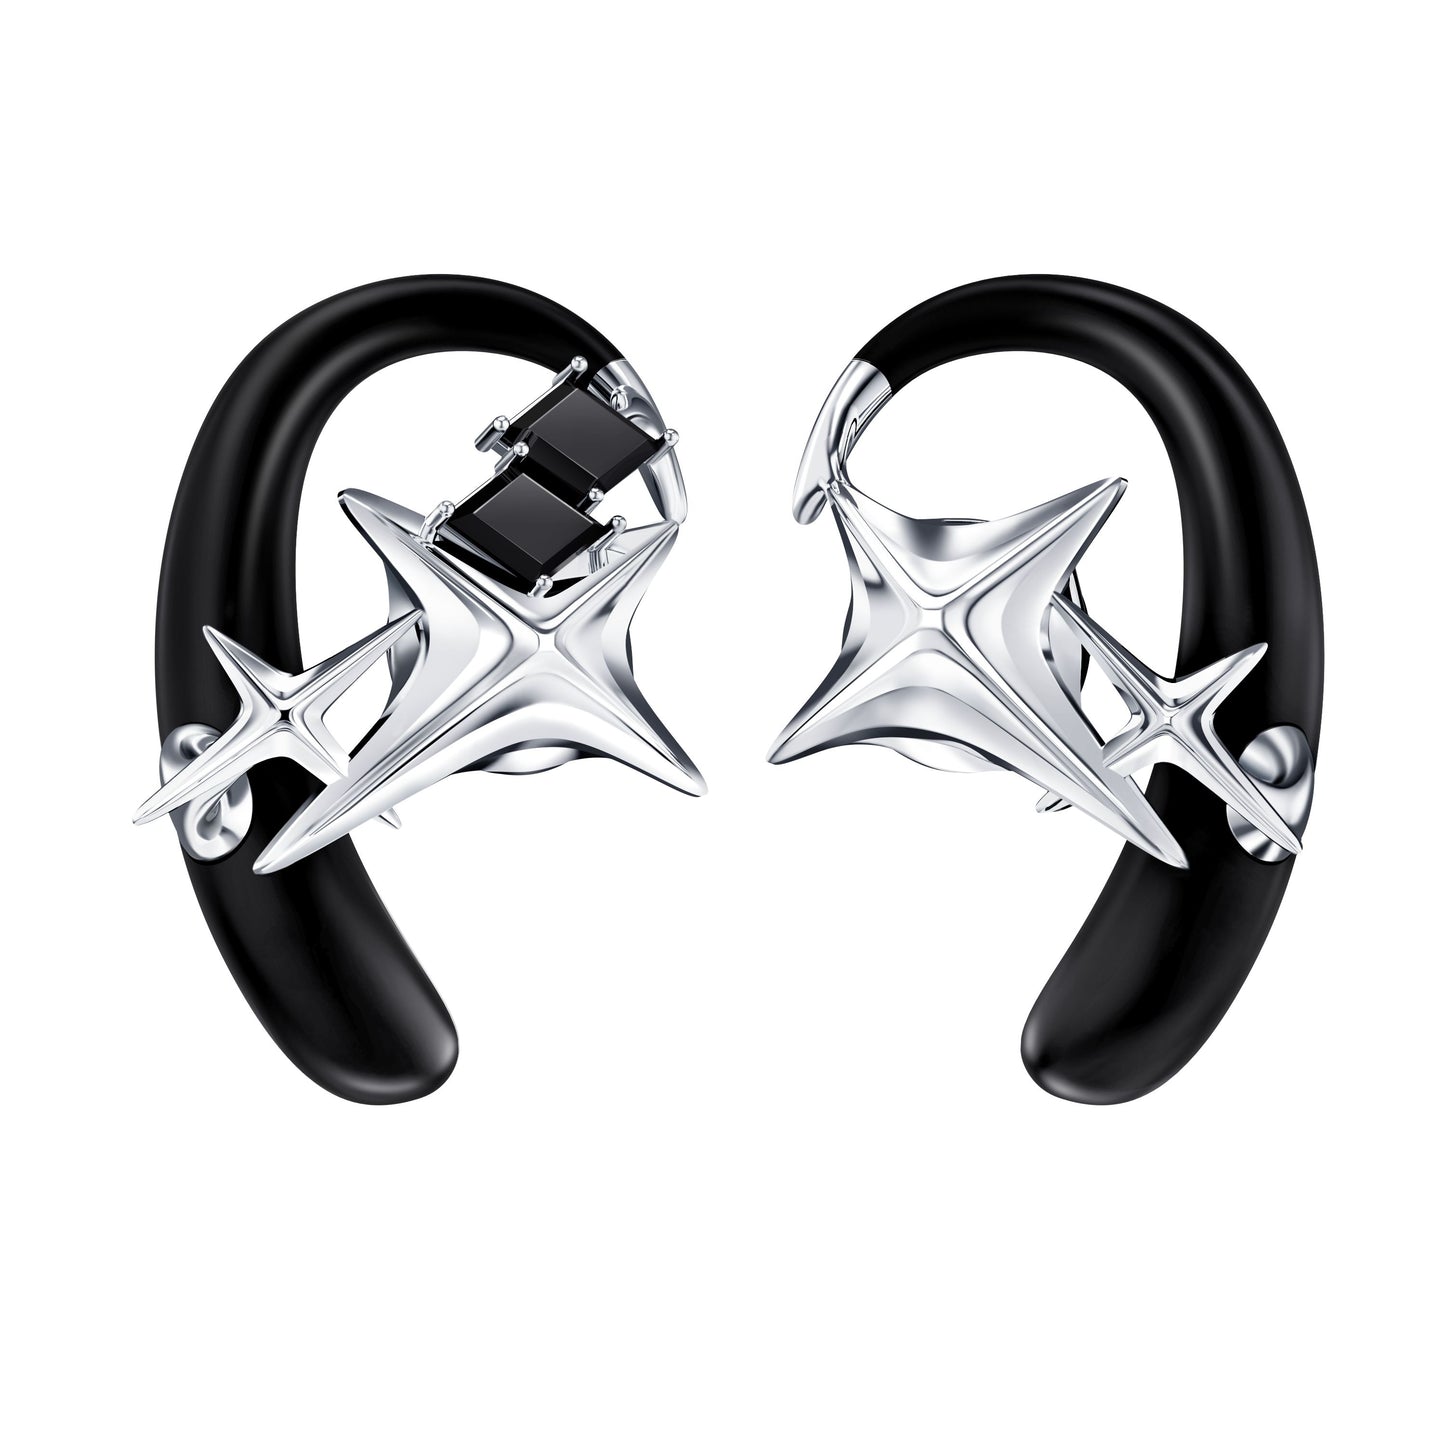 NEBULA - OWS Open-Style Accessory Headphones